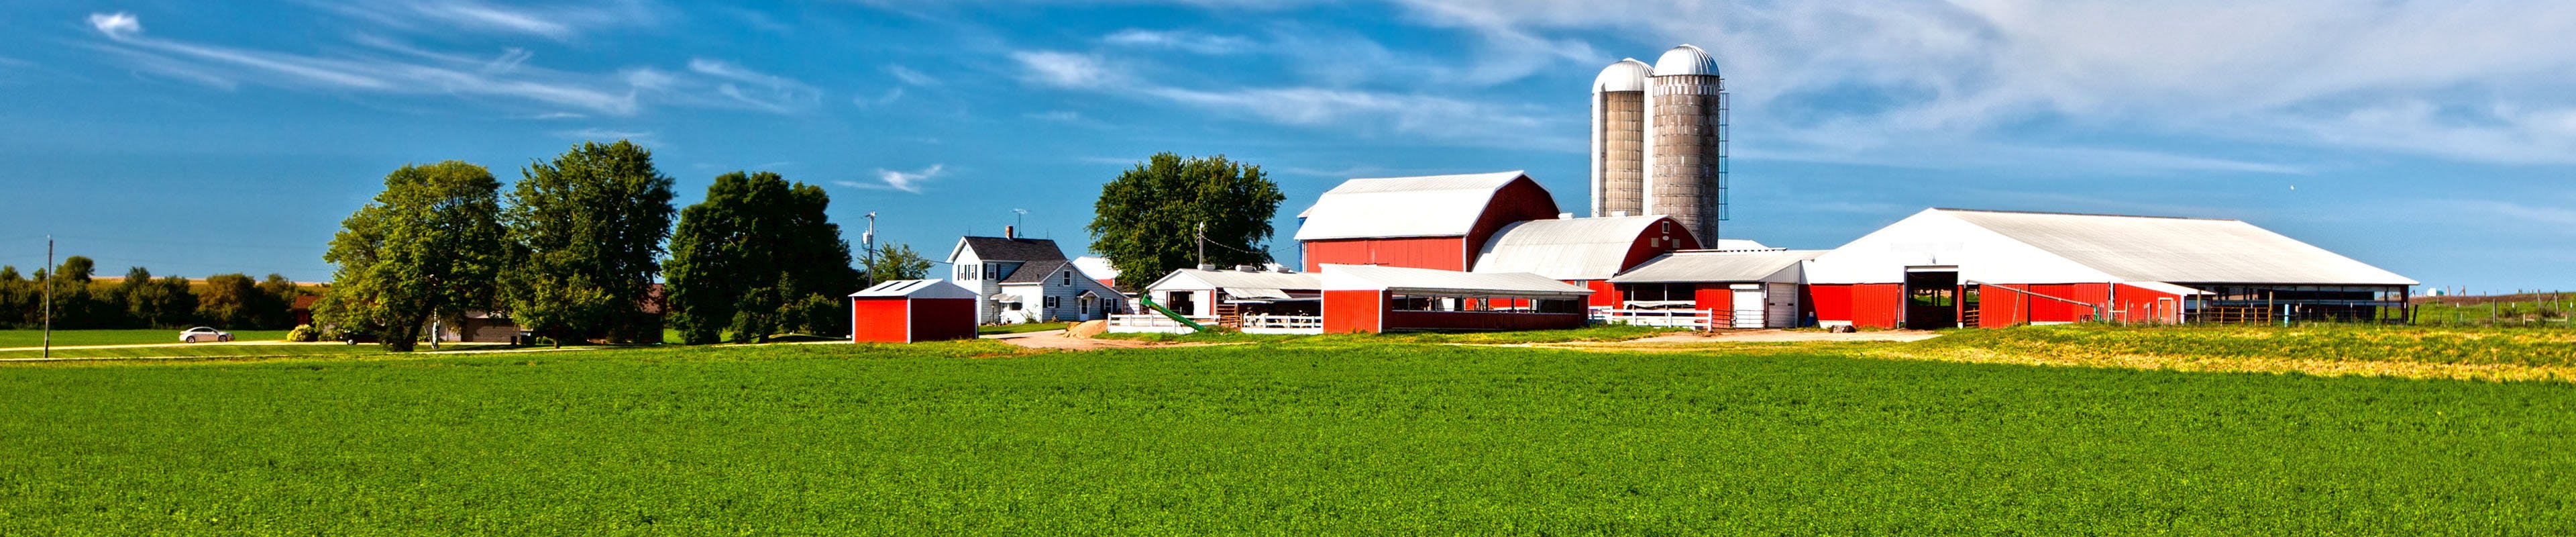 American Family Insurance Prevent Farm Theft